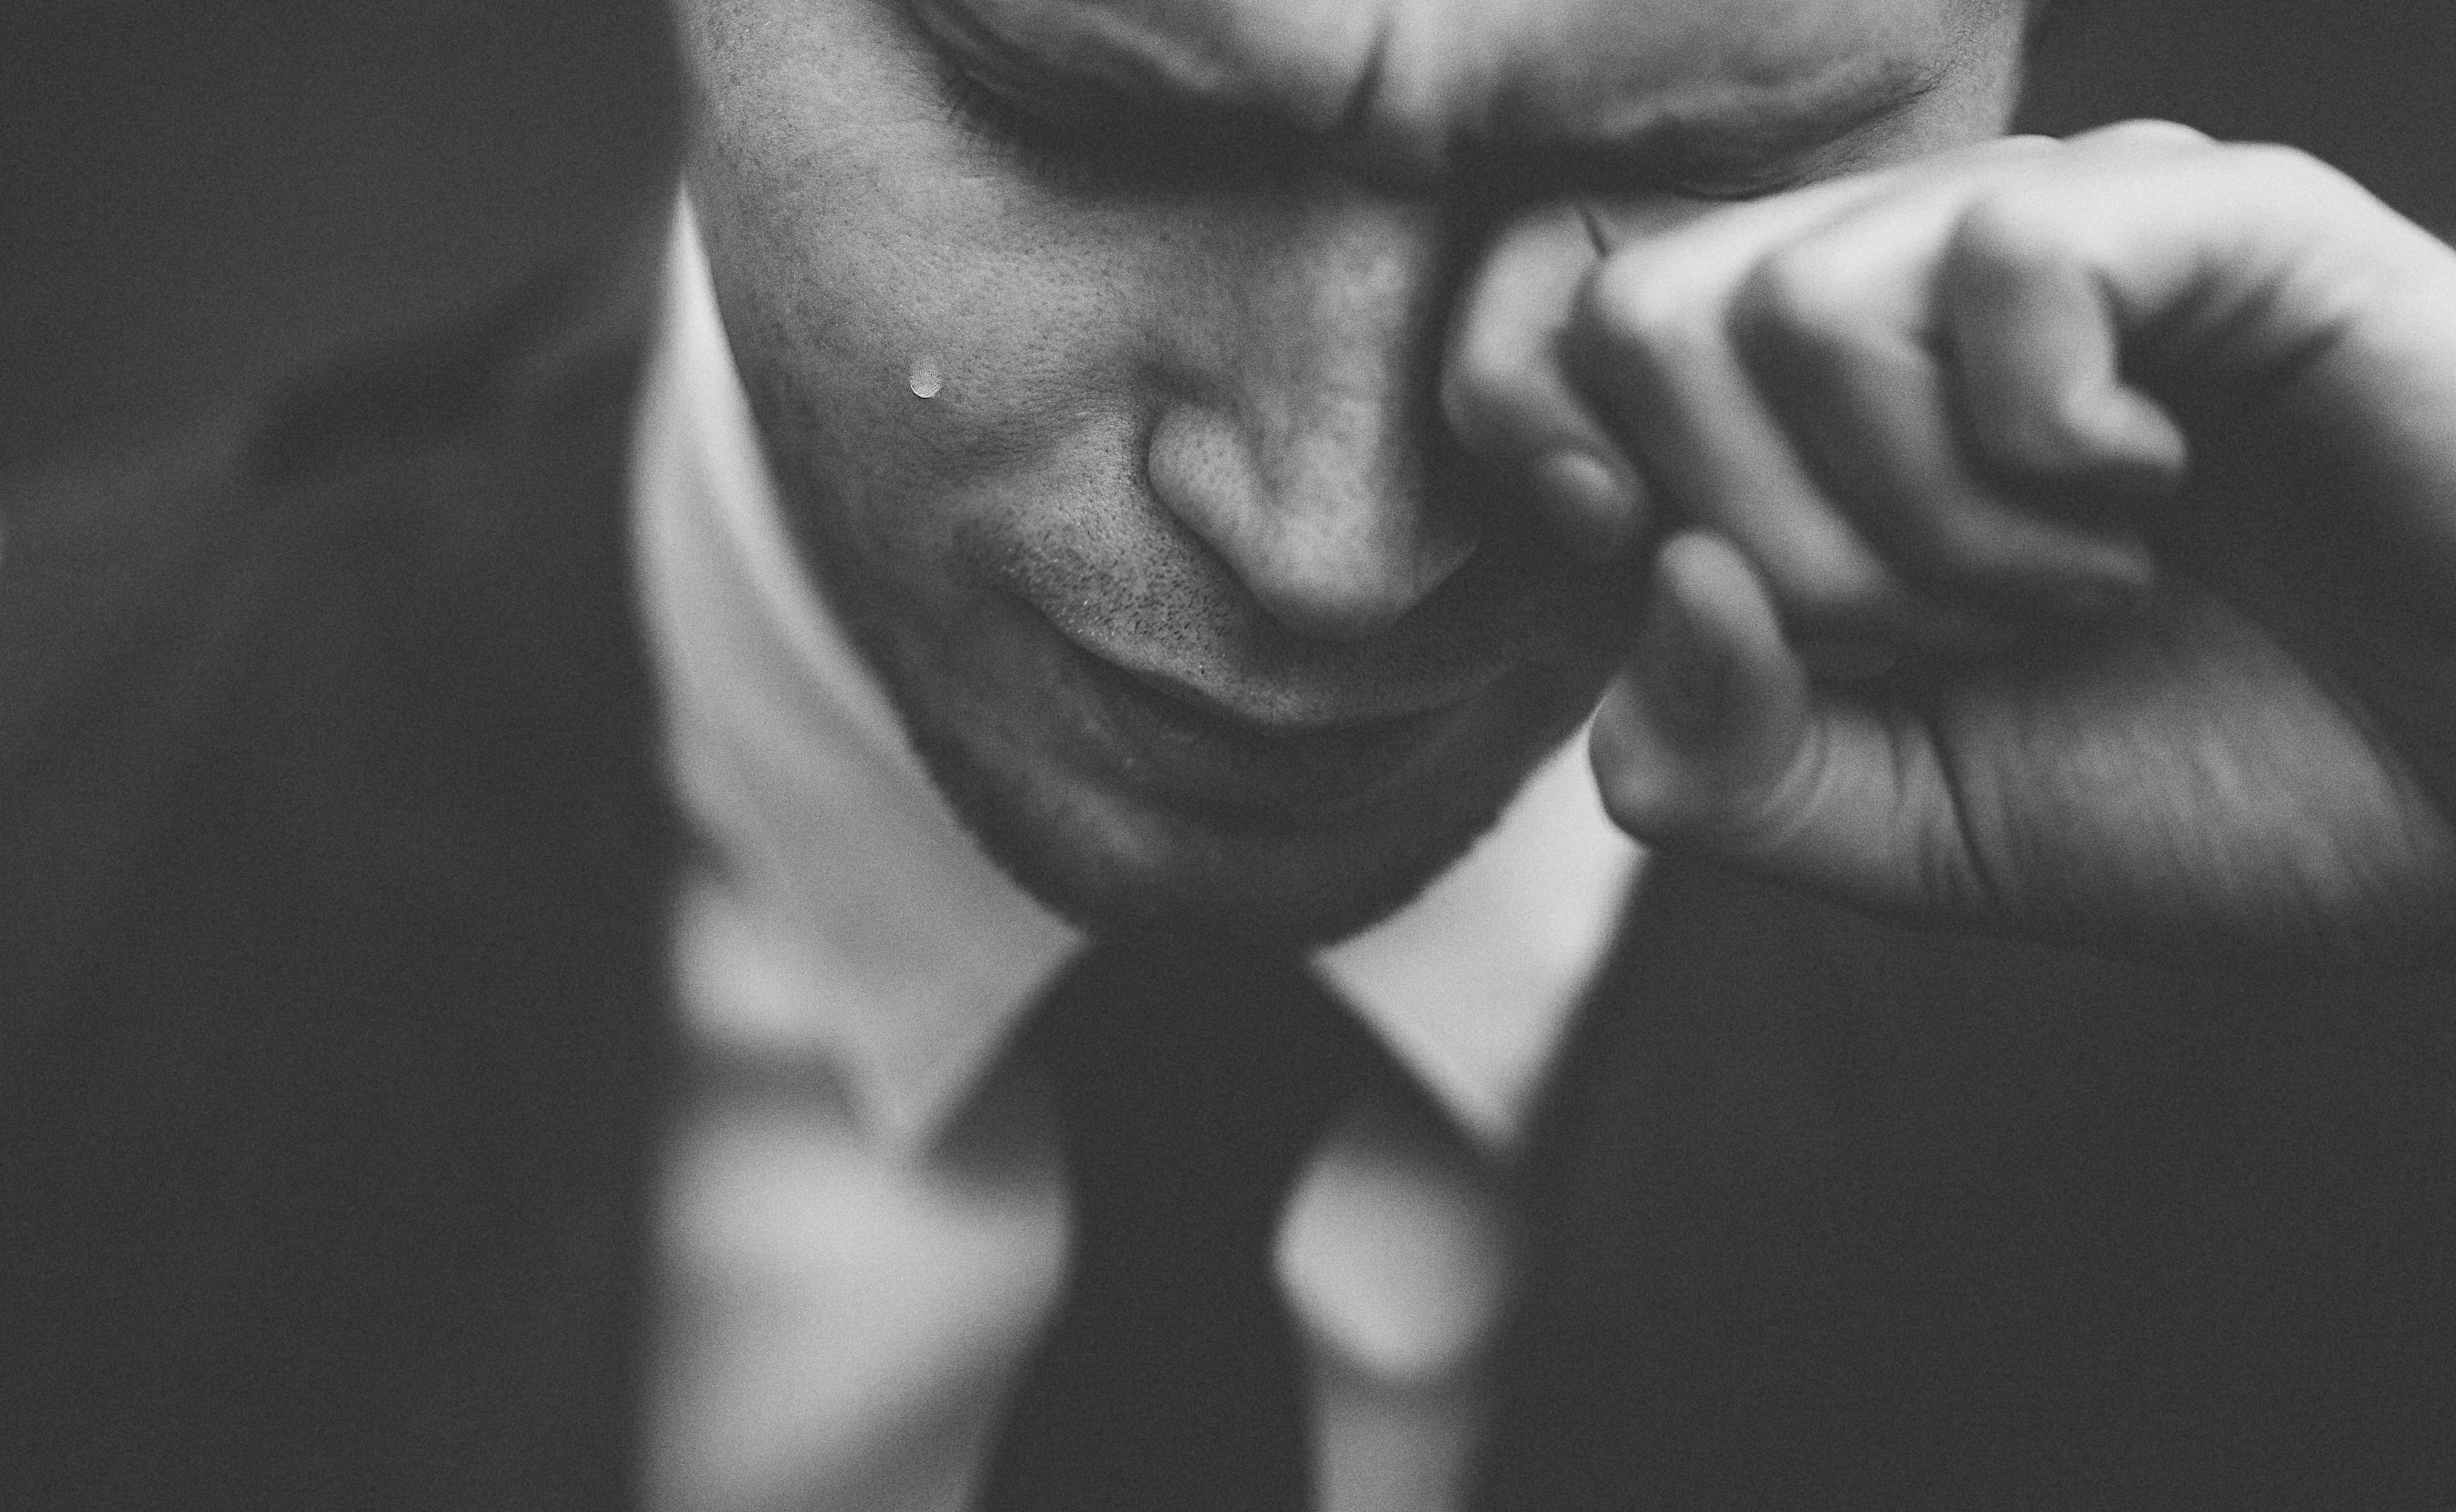 A crying man. | Source: Unsplash